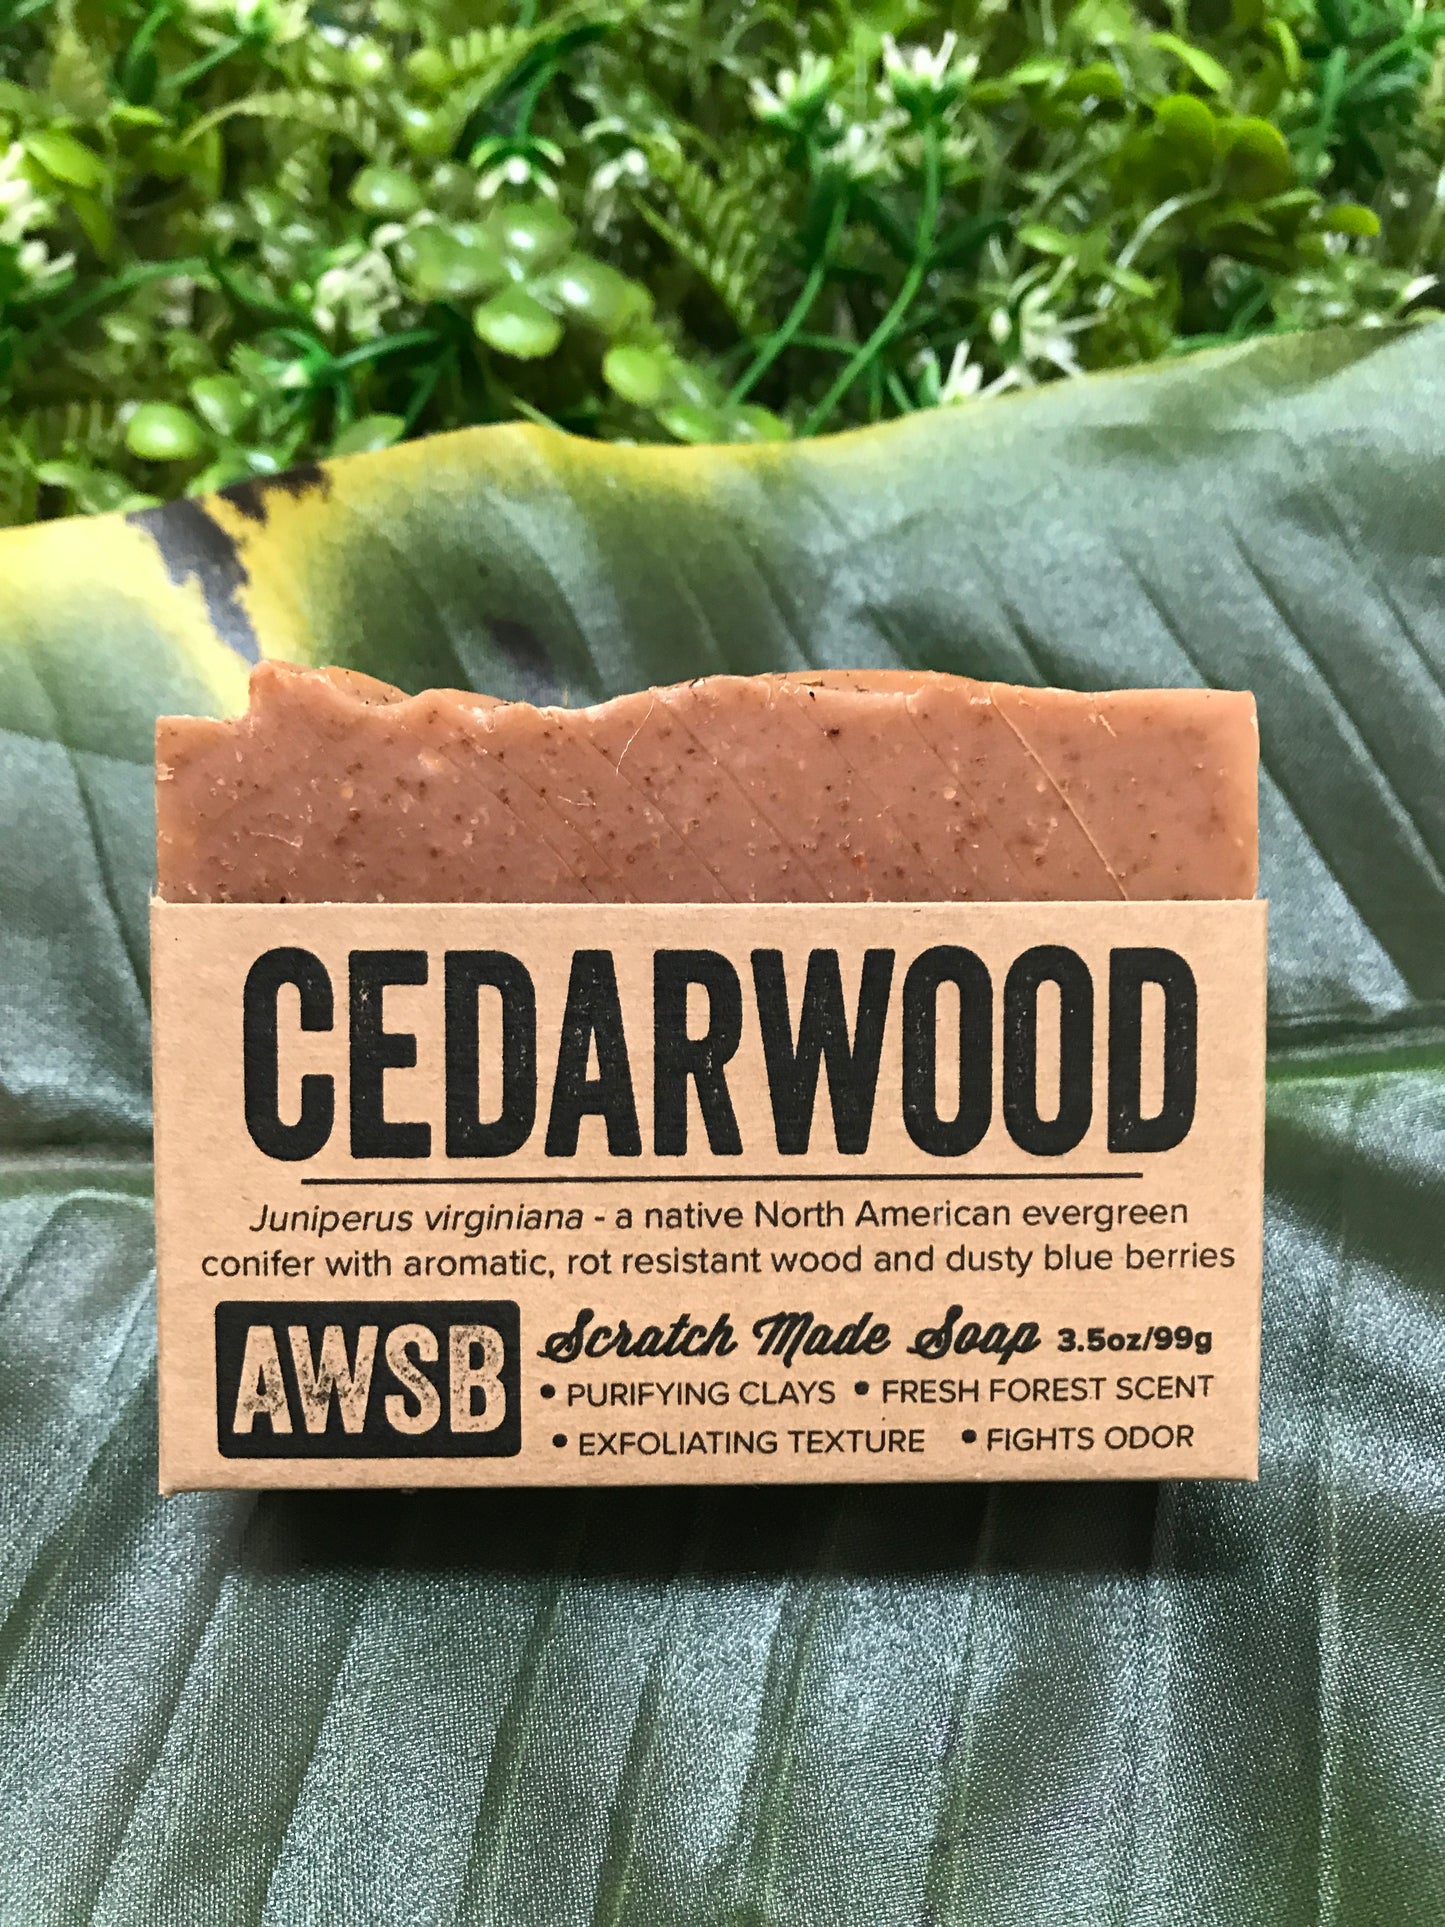 Cedarwood Soap | A Wild Soap Bar - InRugCo Studio & Gift Shop